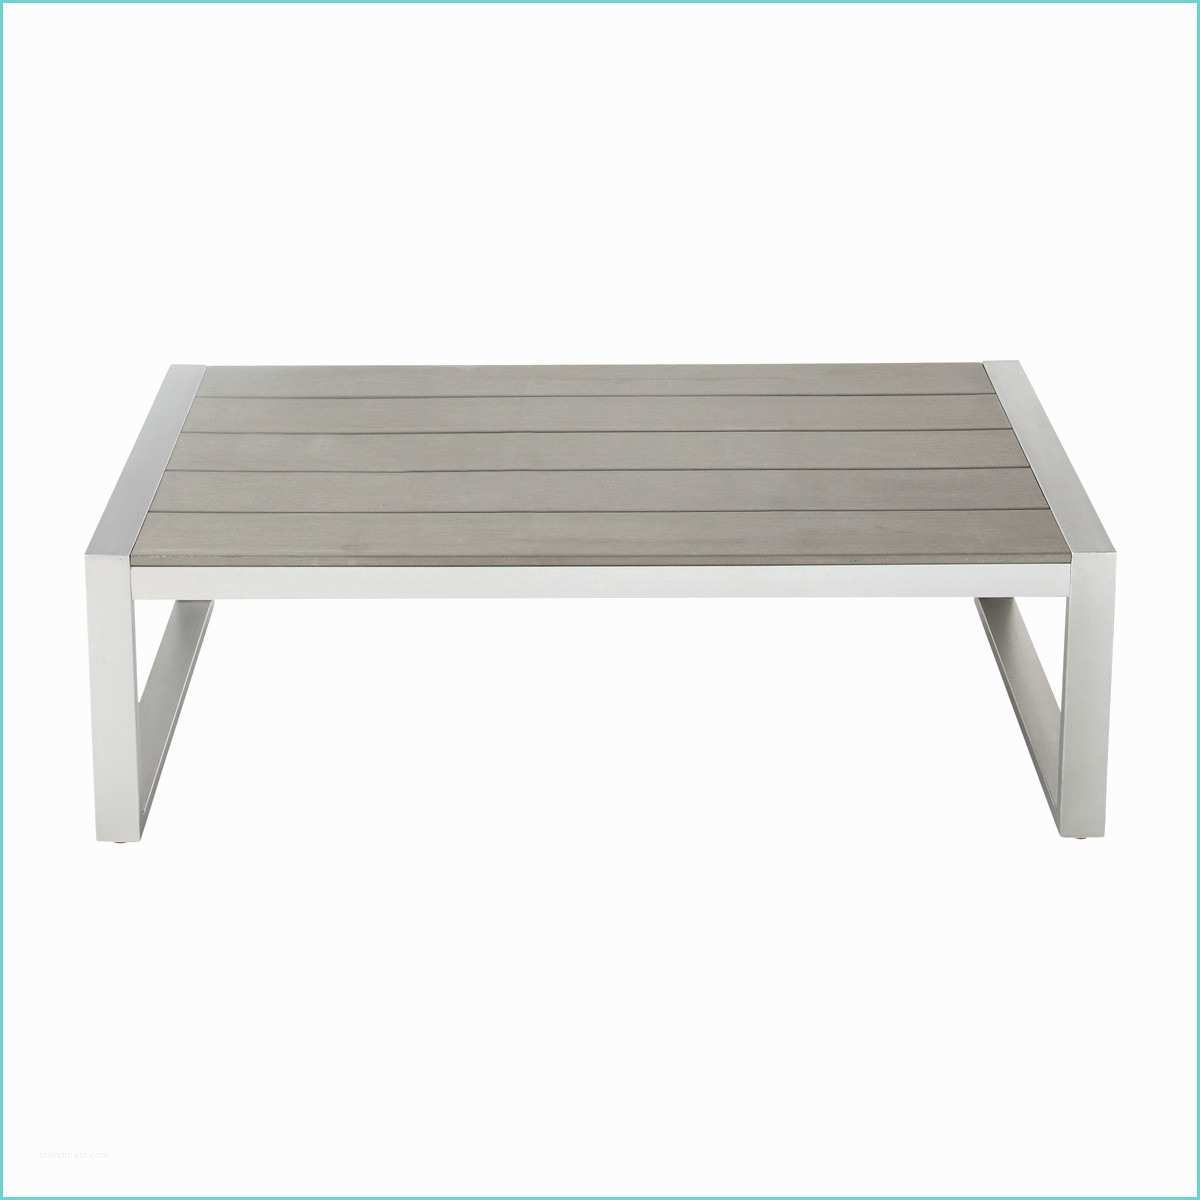 Table Basse Pliante Ikea Table Basse Pliante Simple Table Basse Pliante Amazon